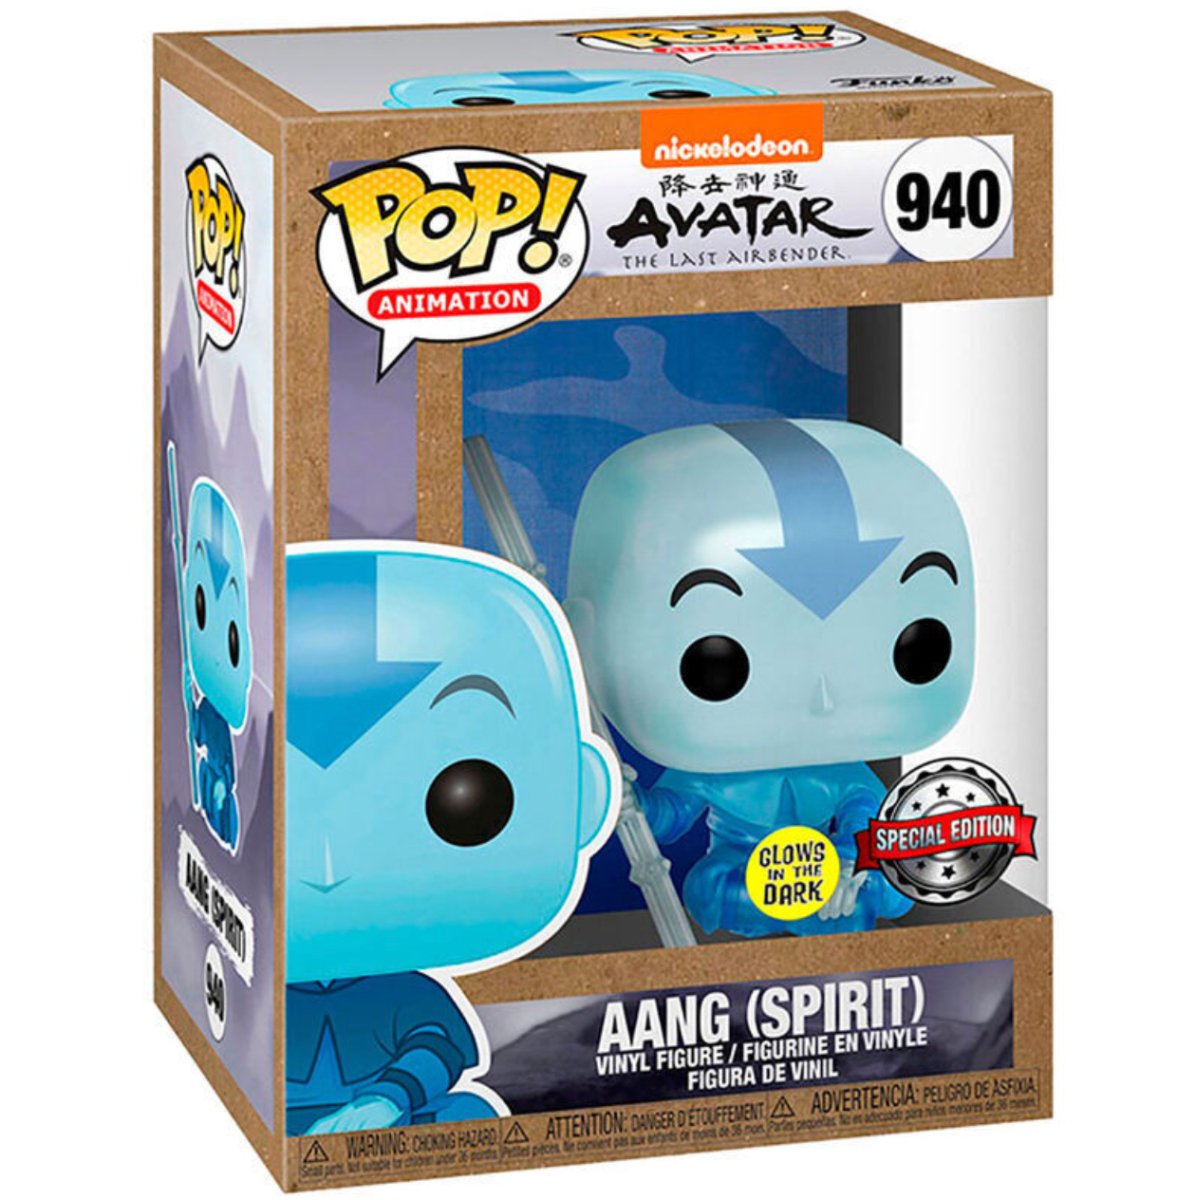 Avatar The Last Air Bender - Aang (Spirit) (GITD Special Edition) #940 - Funko Pop! Vinyl Anime - Persona Toys